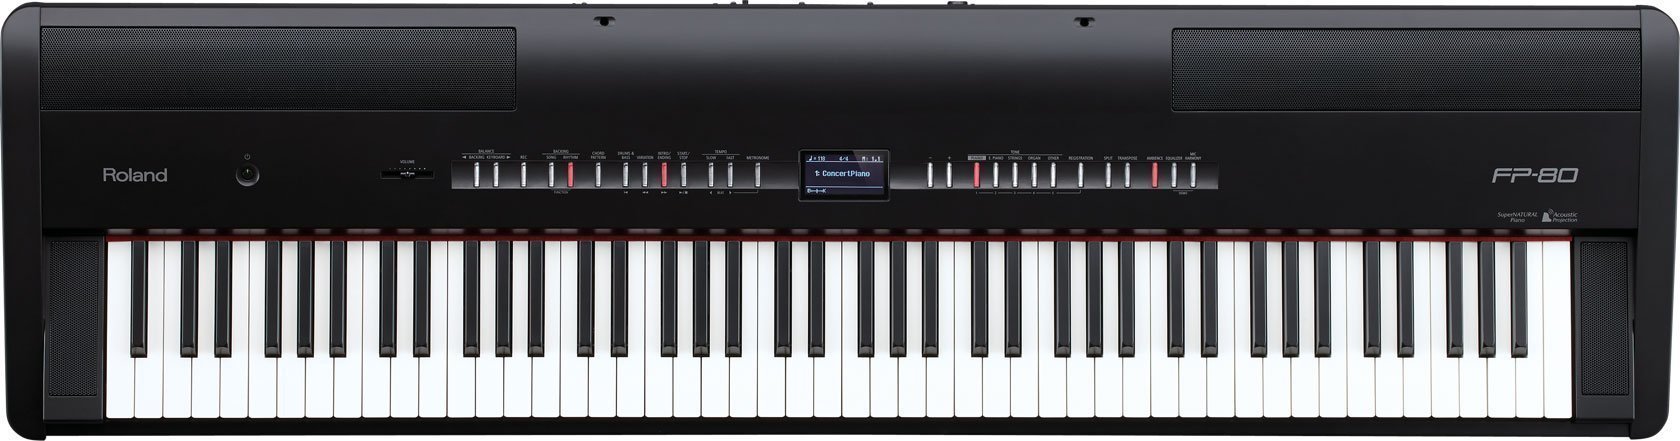 Digital Stage Piano Roland FP 80 Black Portable Digital Piano